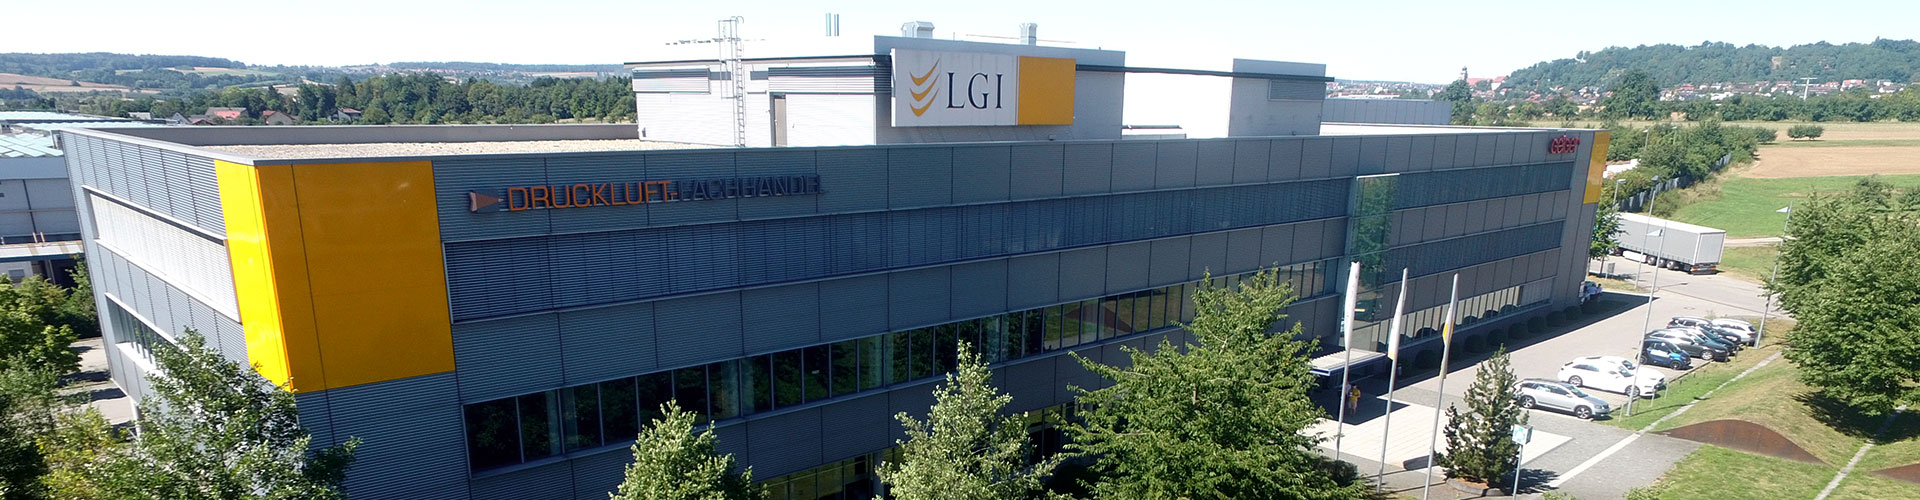 LGI building for compressed air trade